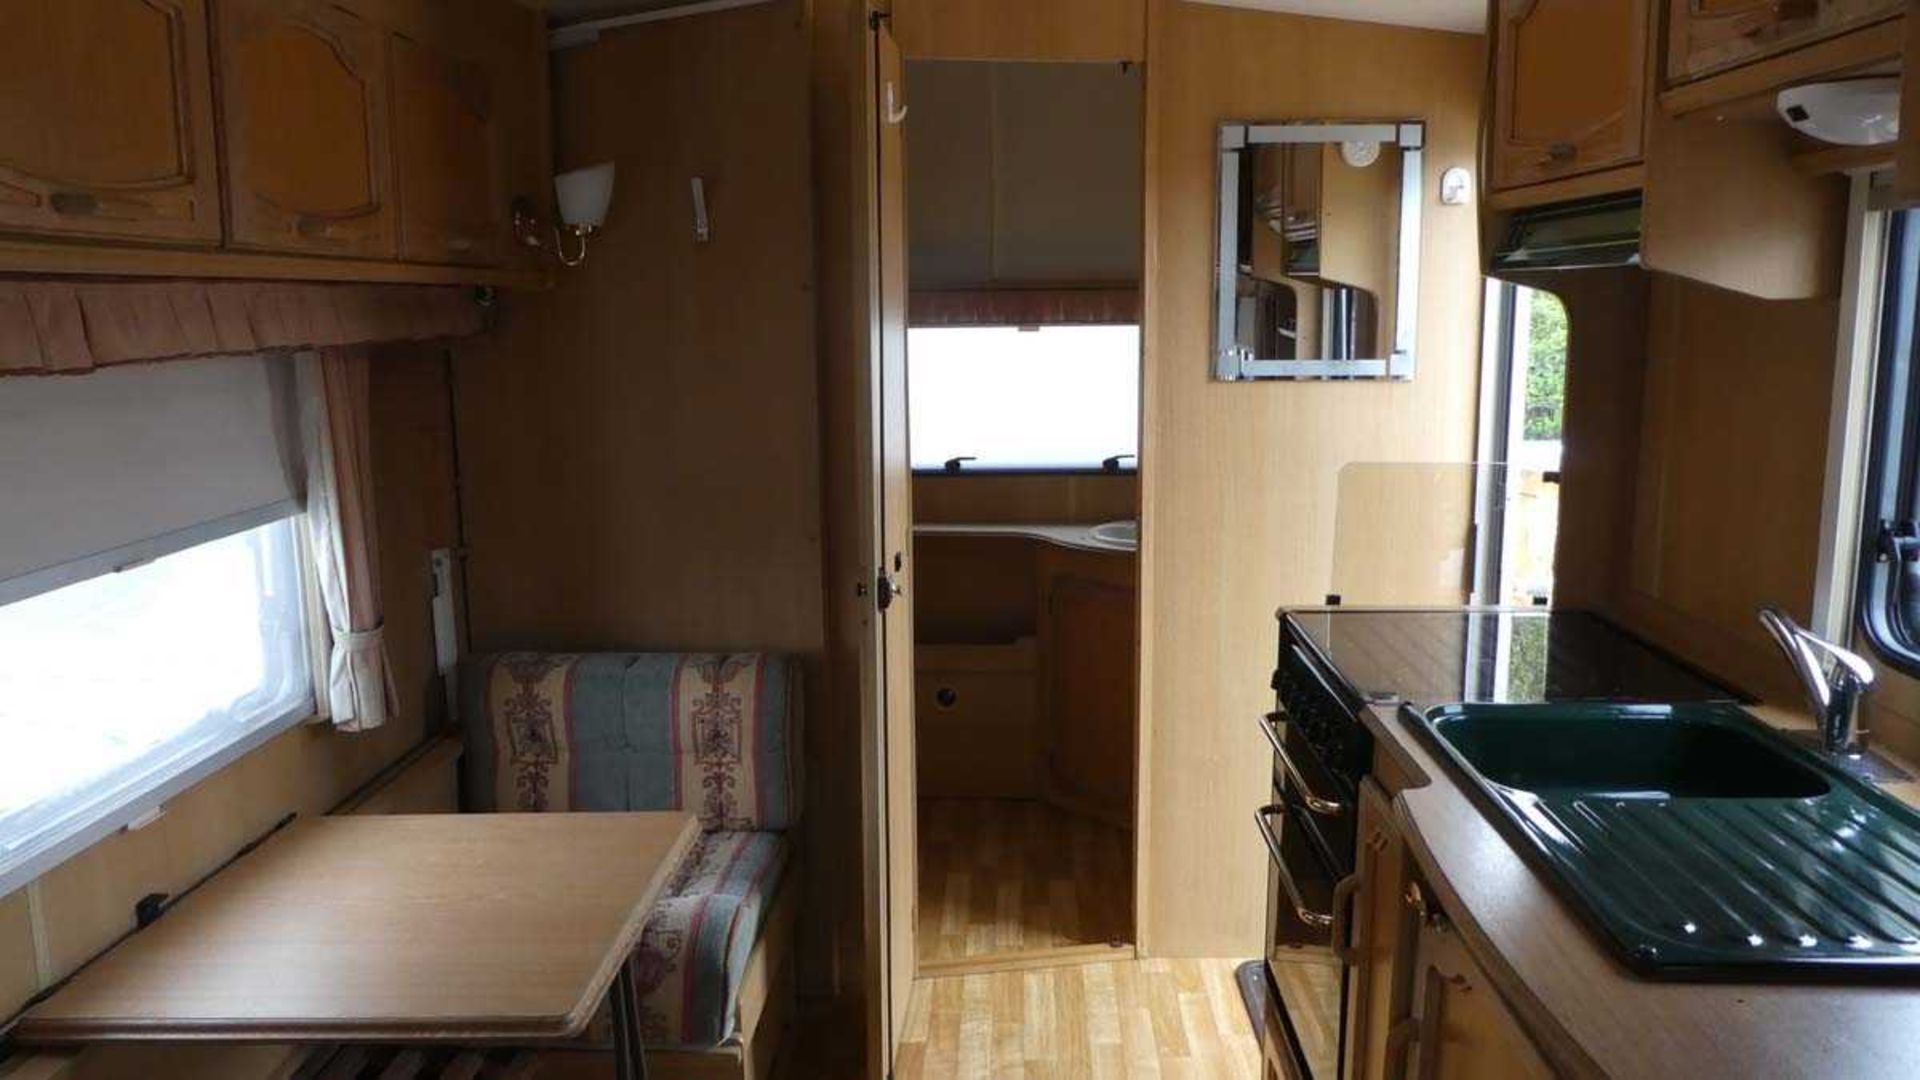 Abi Award Morningstar 18ft touring caravan, 4-5 berth with cooker, refrigerator, WC, shower, - Image 10 of 12